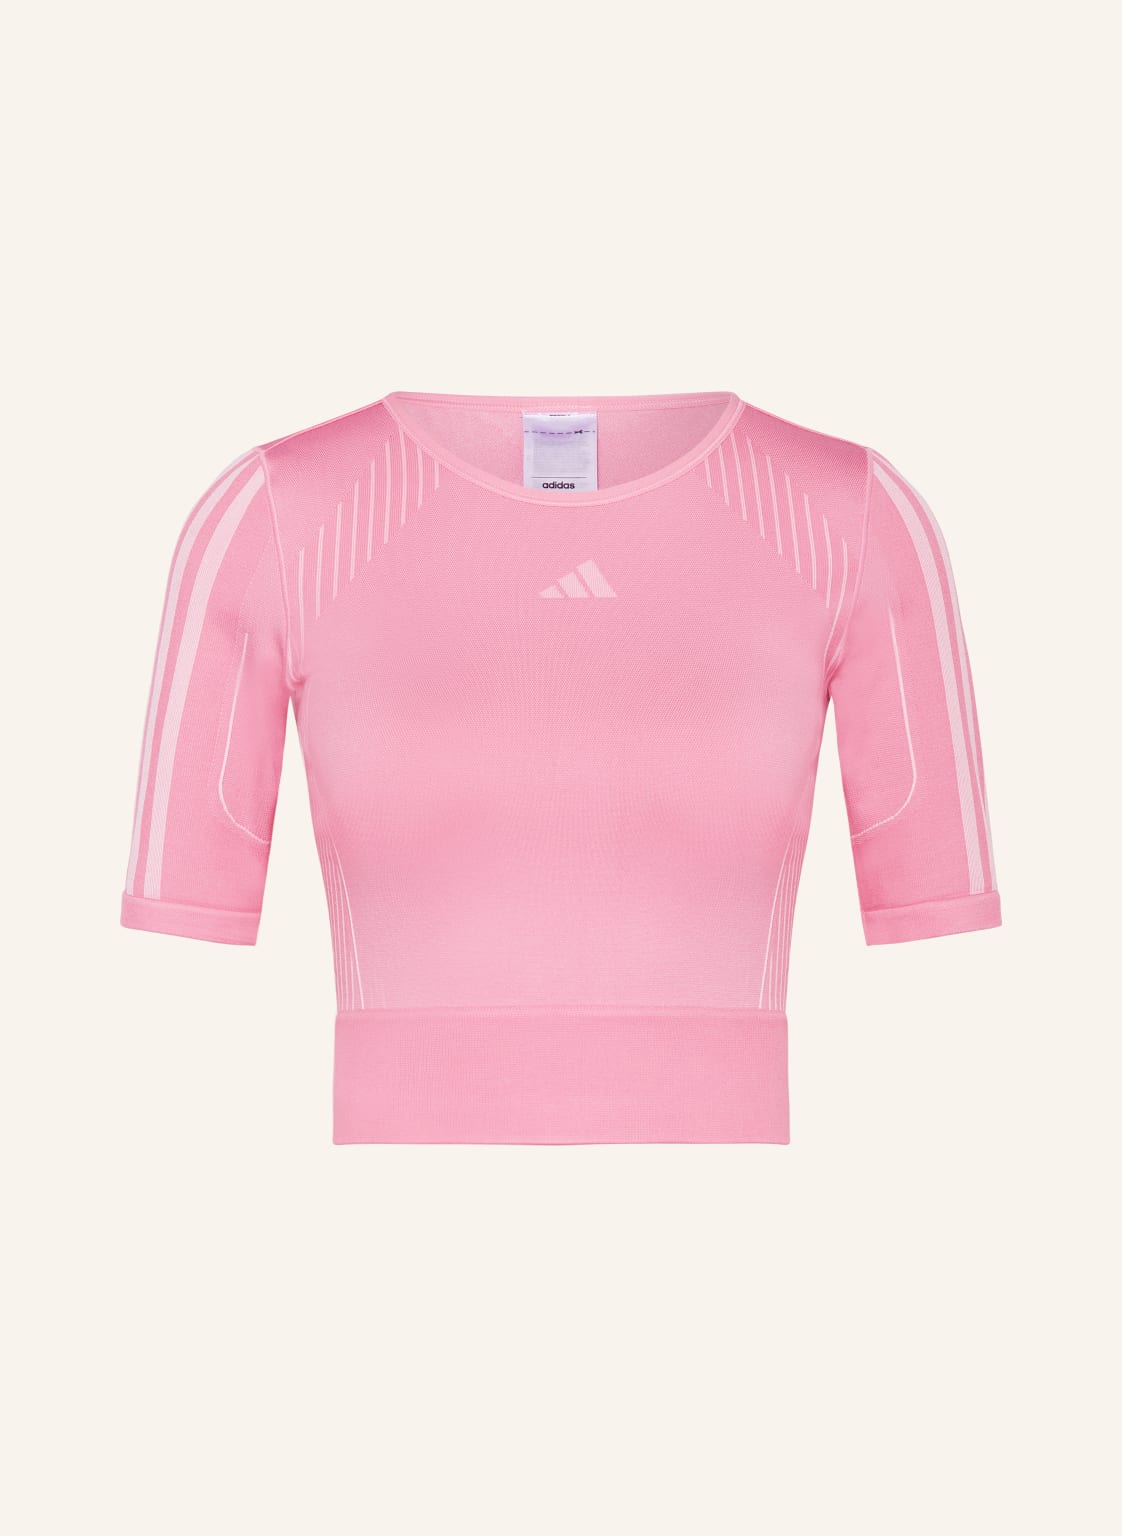 Adidas Cropped-Shirt pink von Adidas